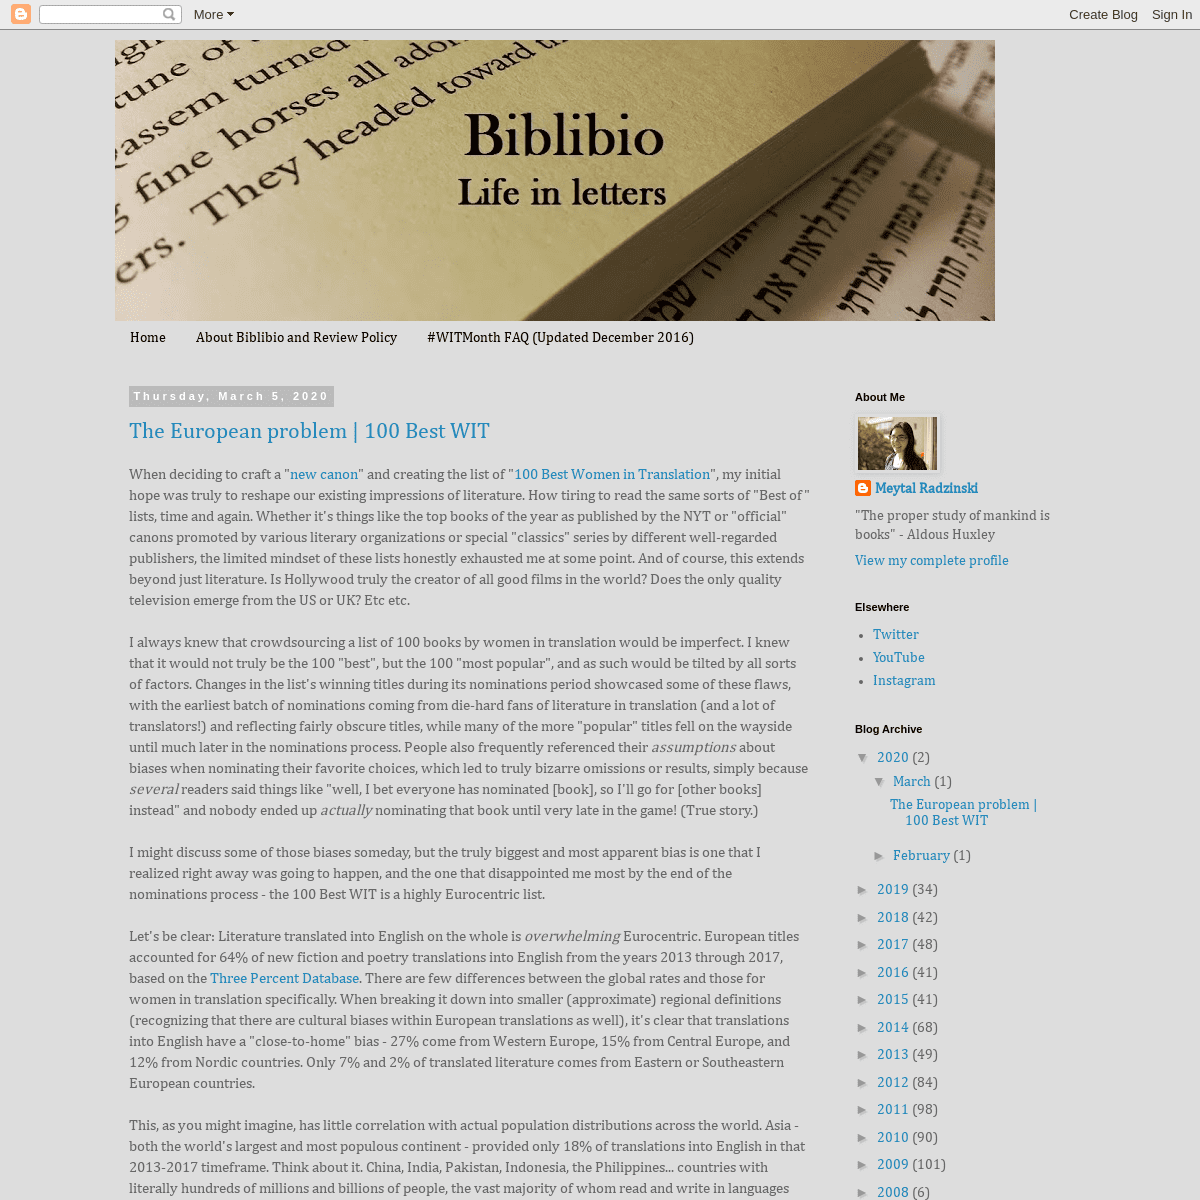 A complete backup of biblibio.blogspot.com